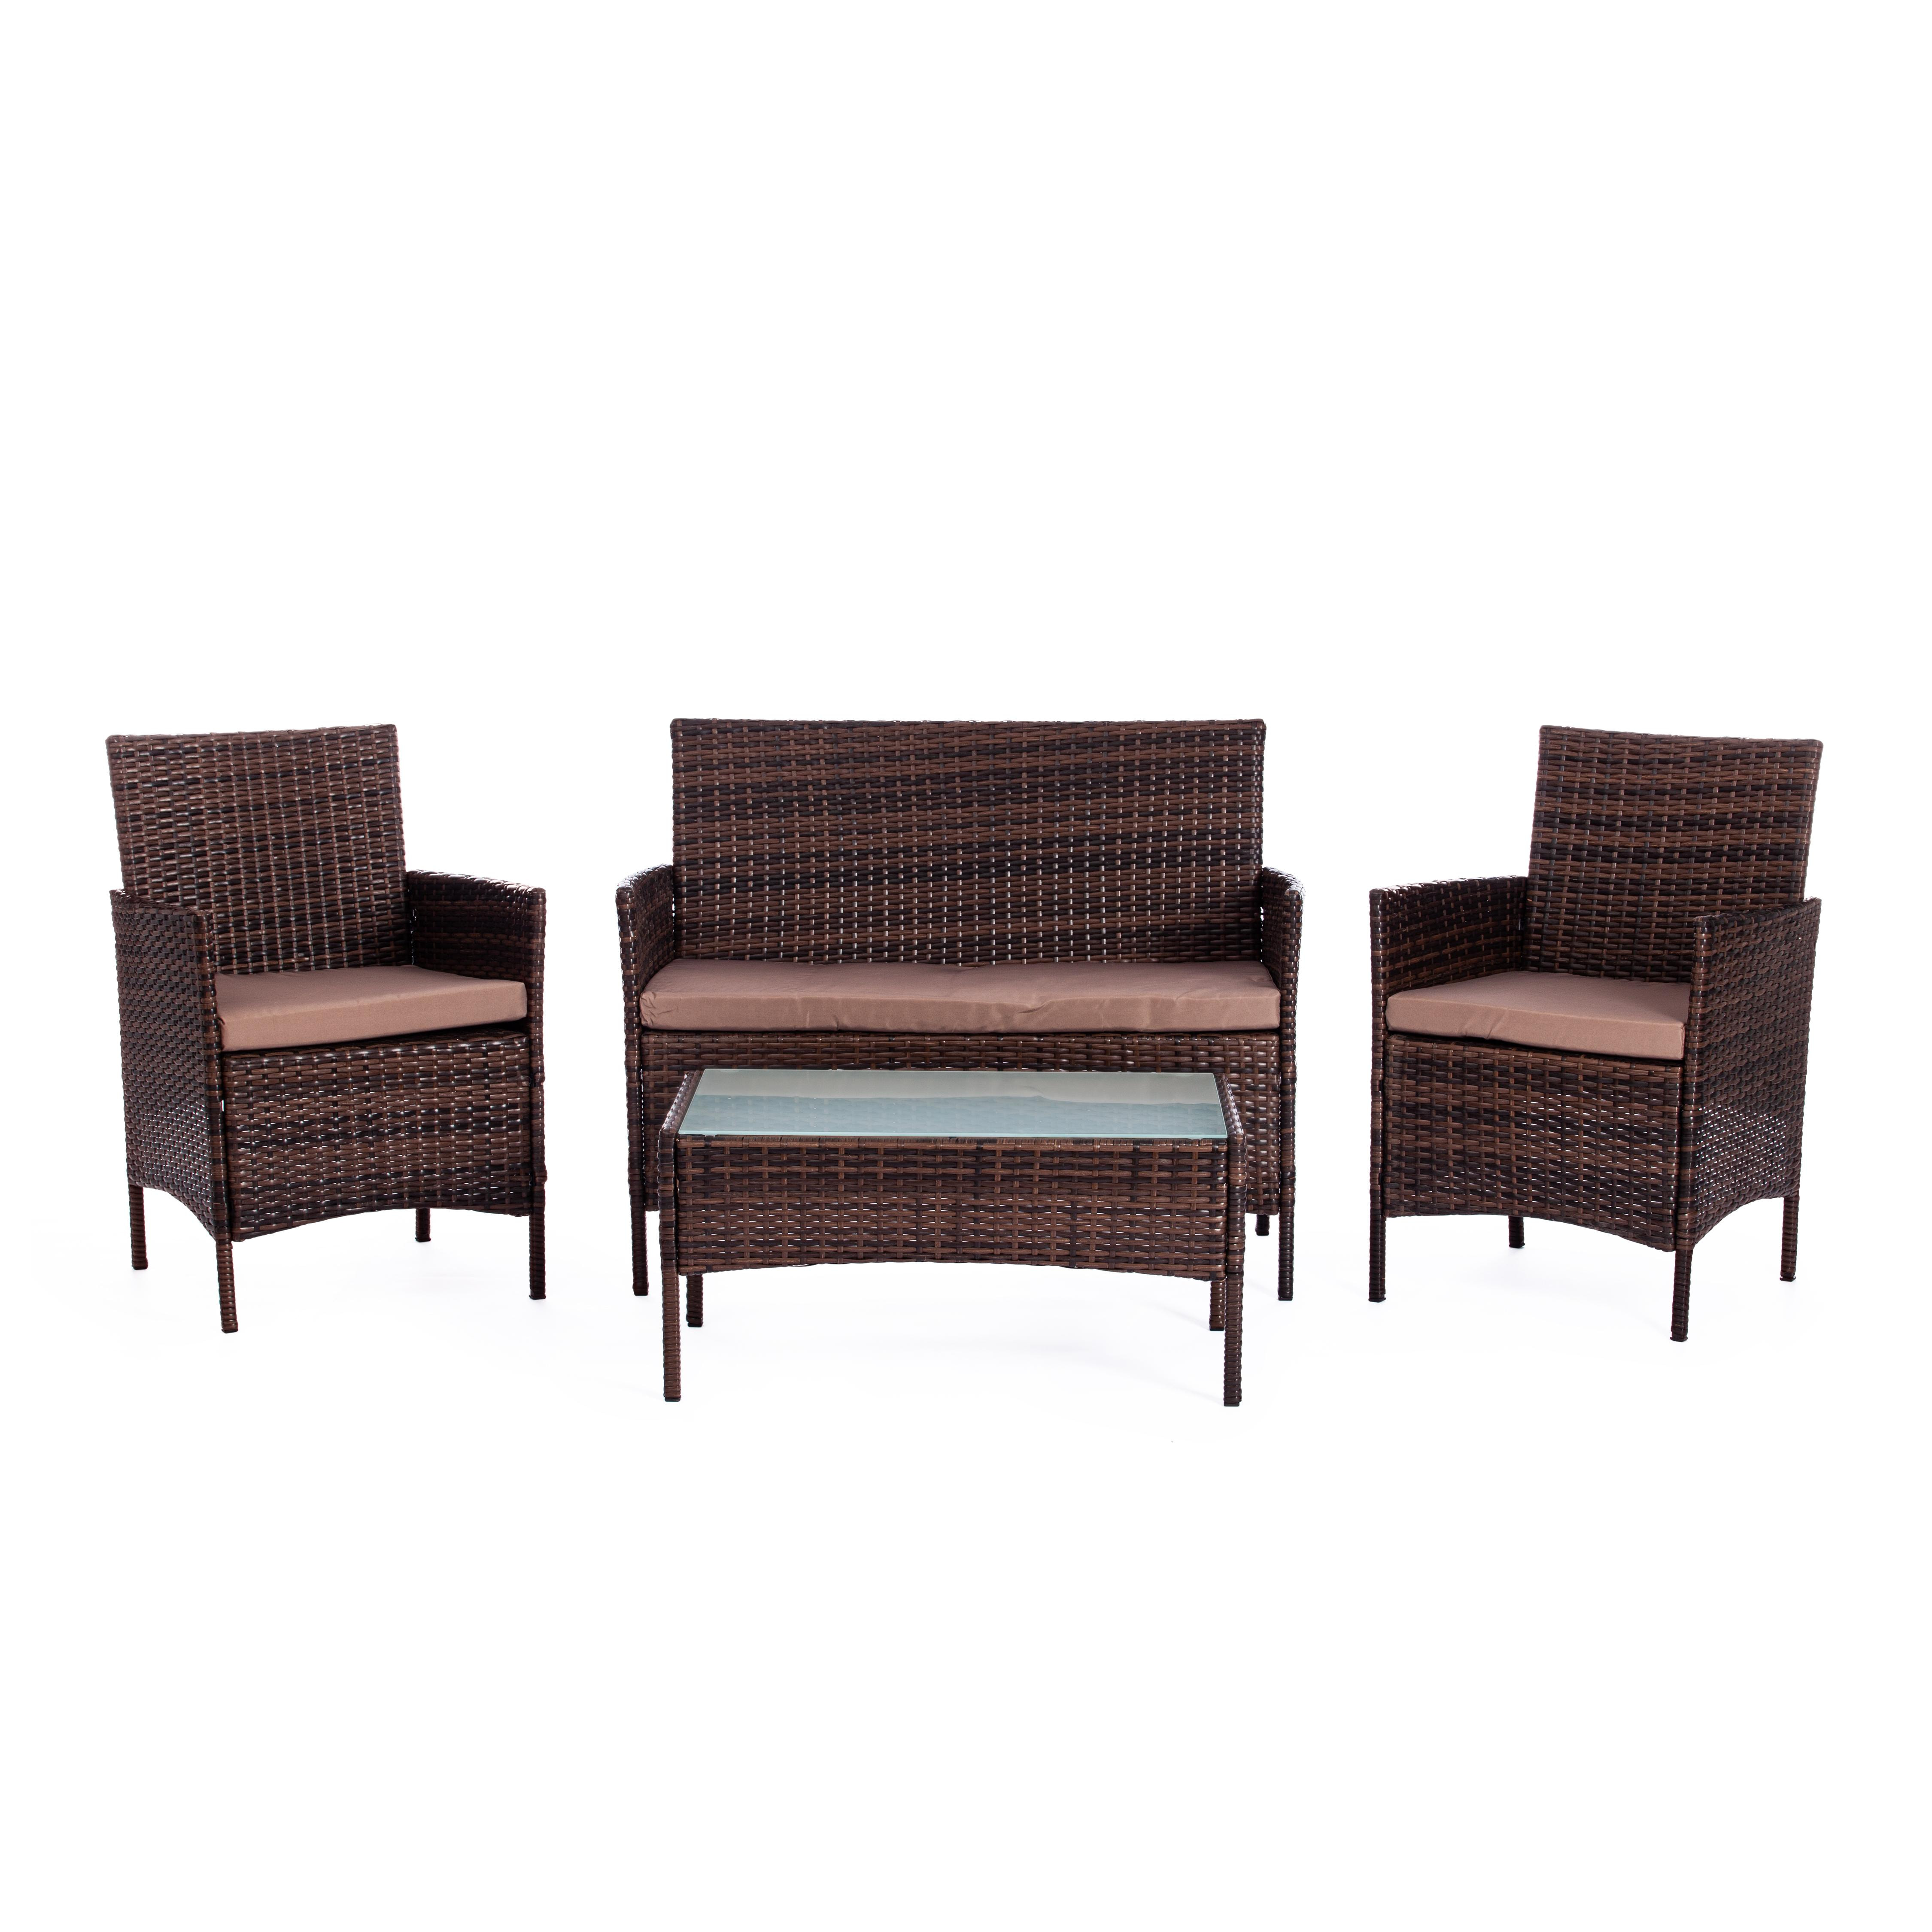 Лаундж сет (диван+2кресла+столик+подушки) (mod. 210013 А) пластиковый ротанг, 108х62х83см/60х62х83см/80х48х39см, темно-коричневый, ткань DB-18 серый